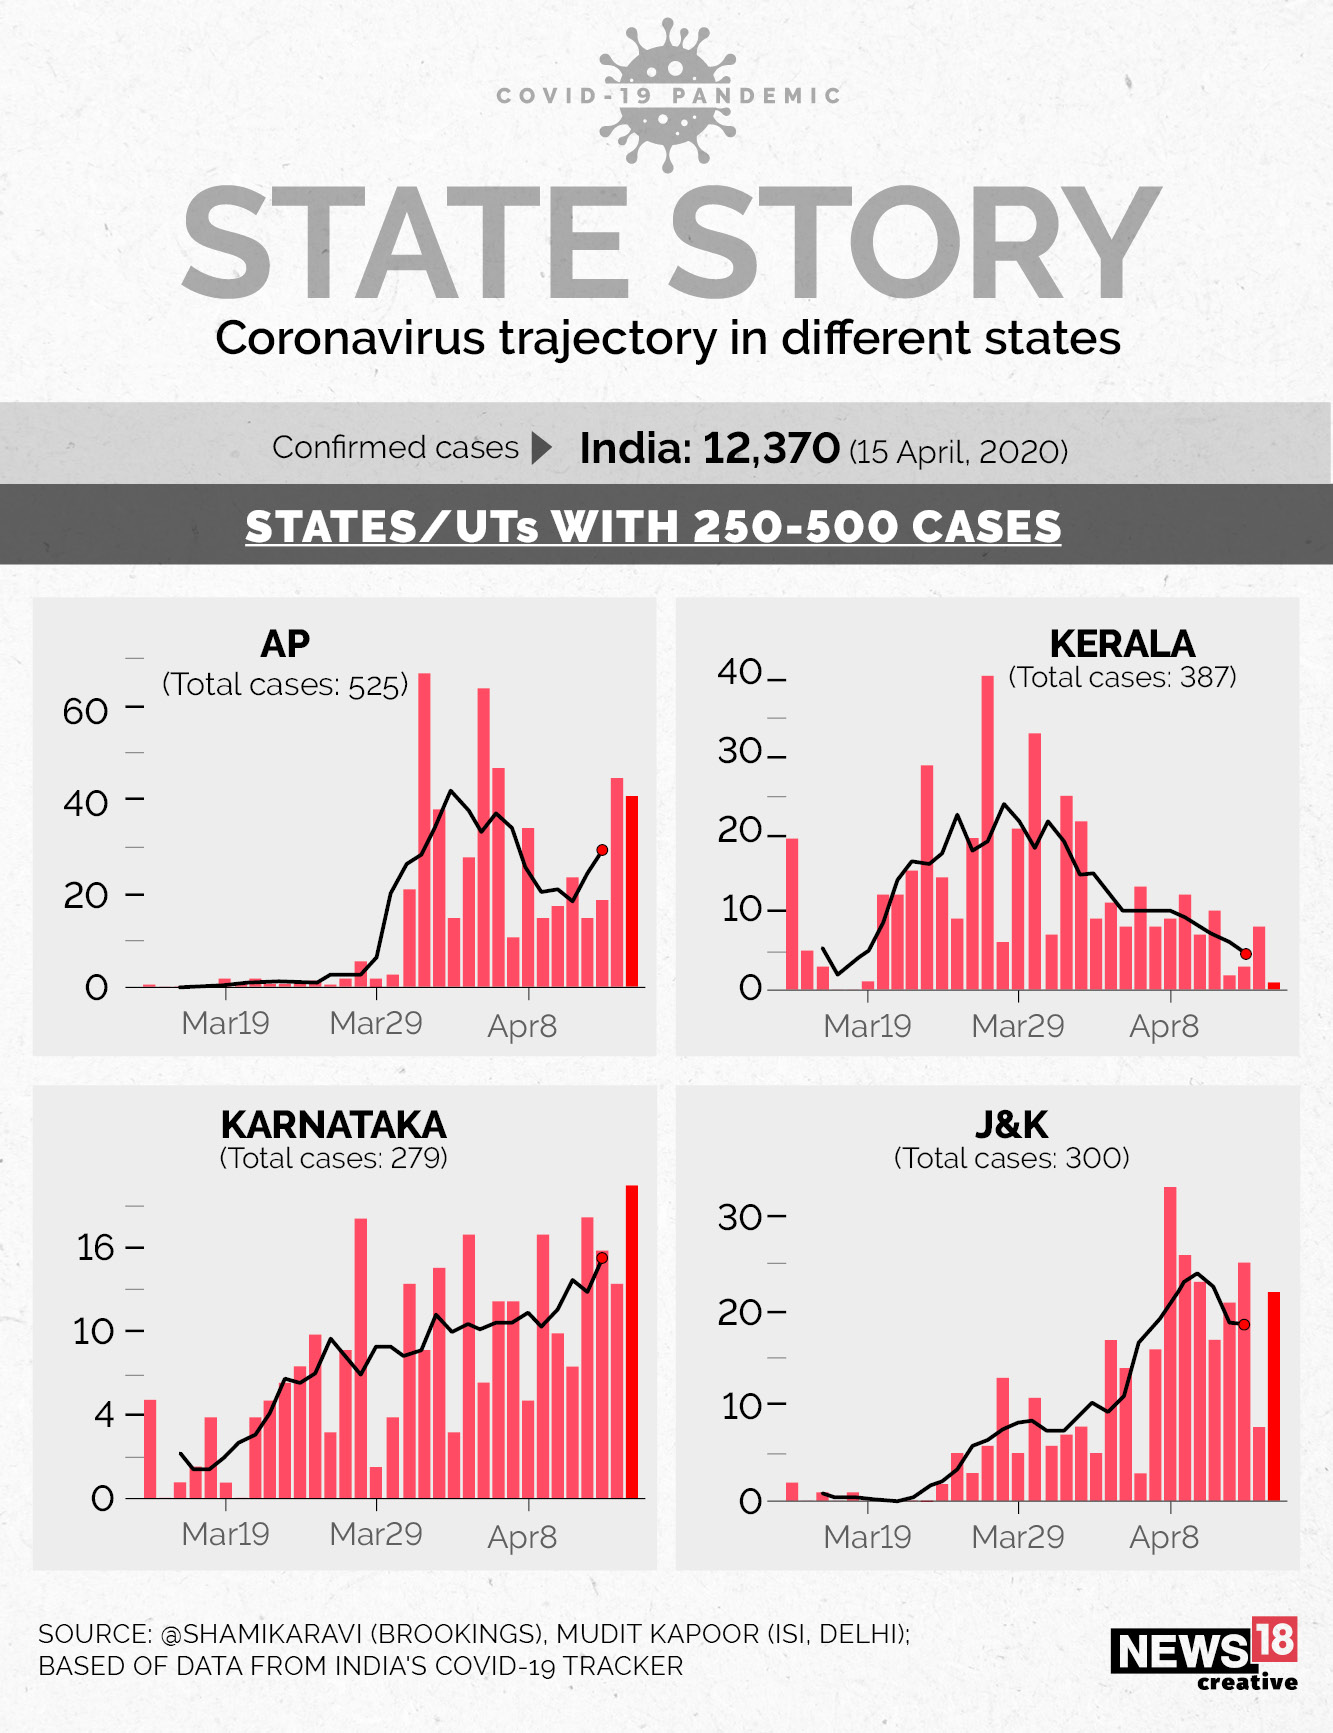 Covid-19 case curve across states, from Maharashtra to Tamil Nadu